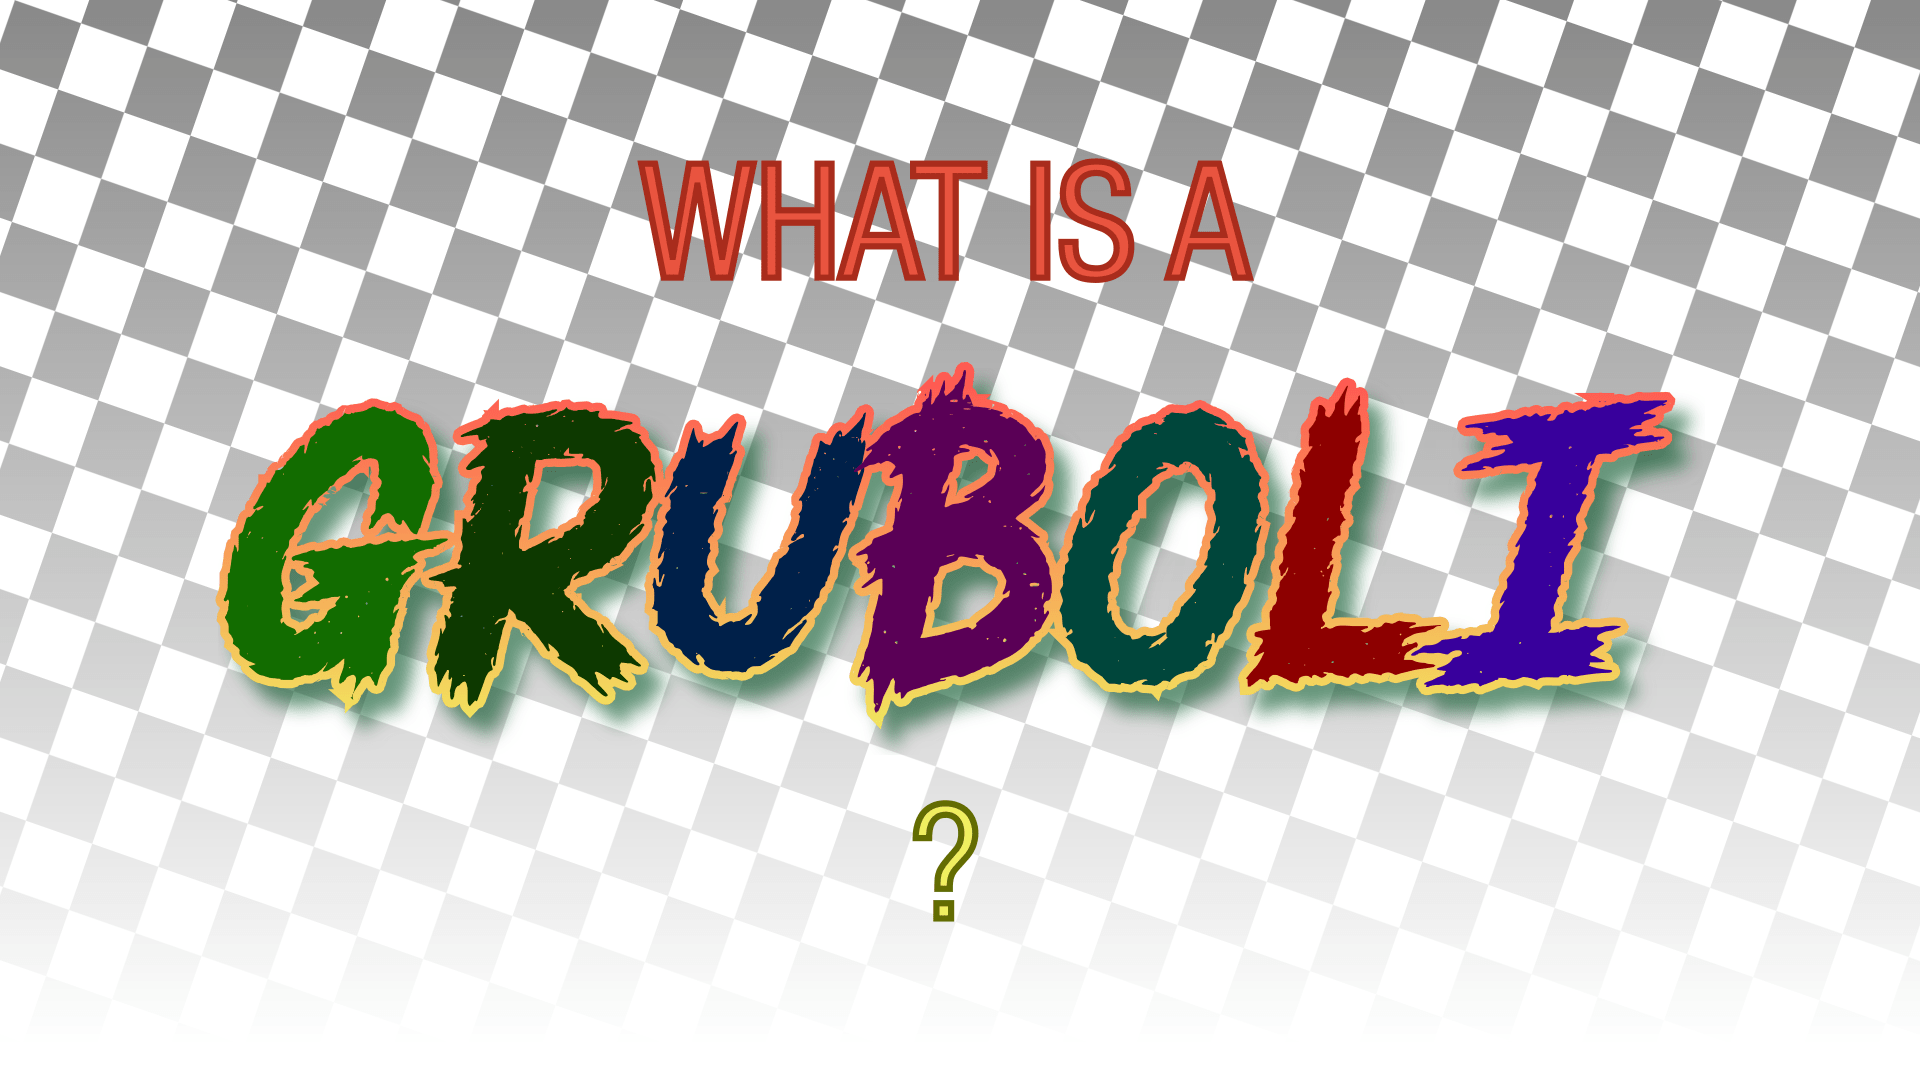 What is a Gruboli?